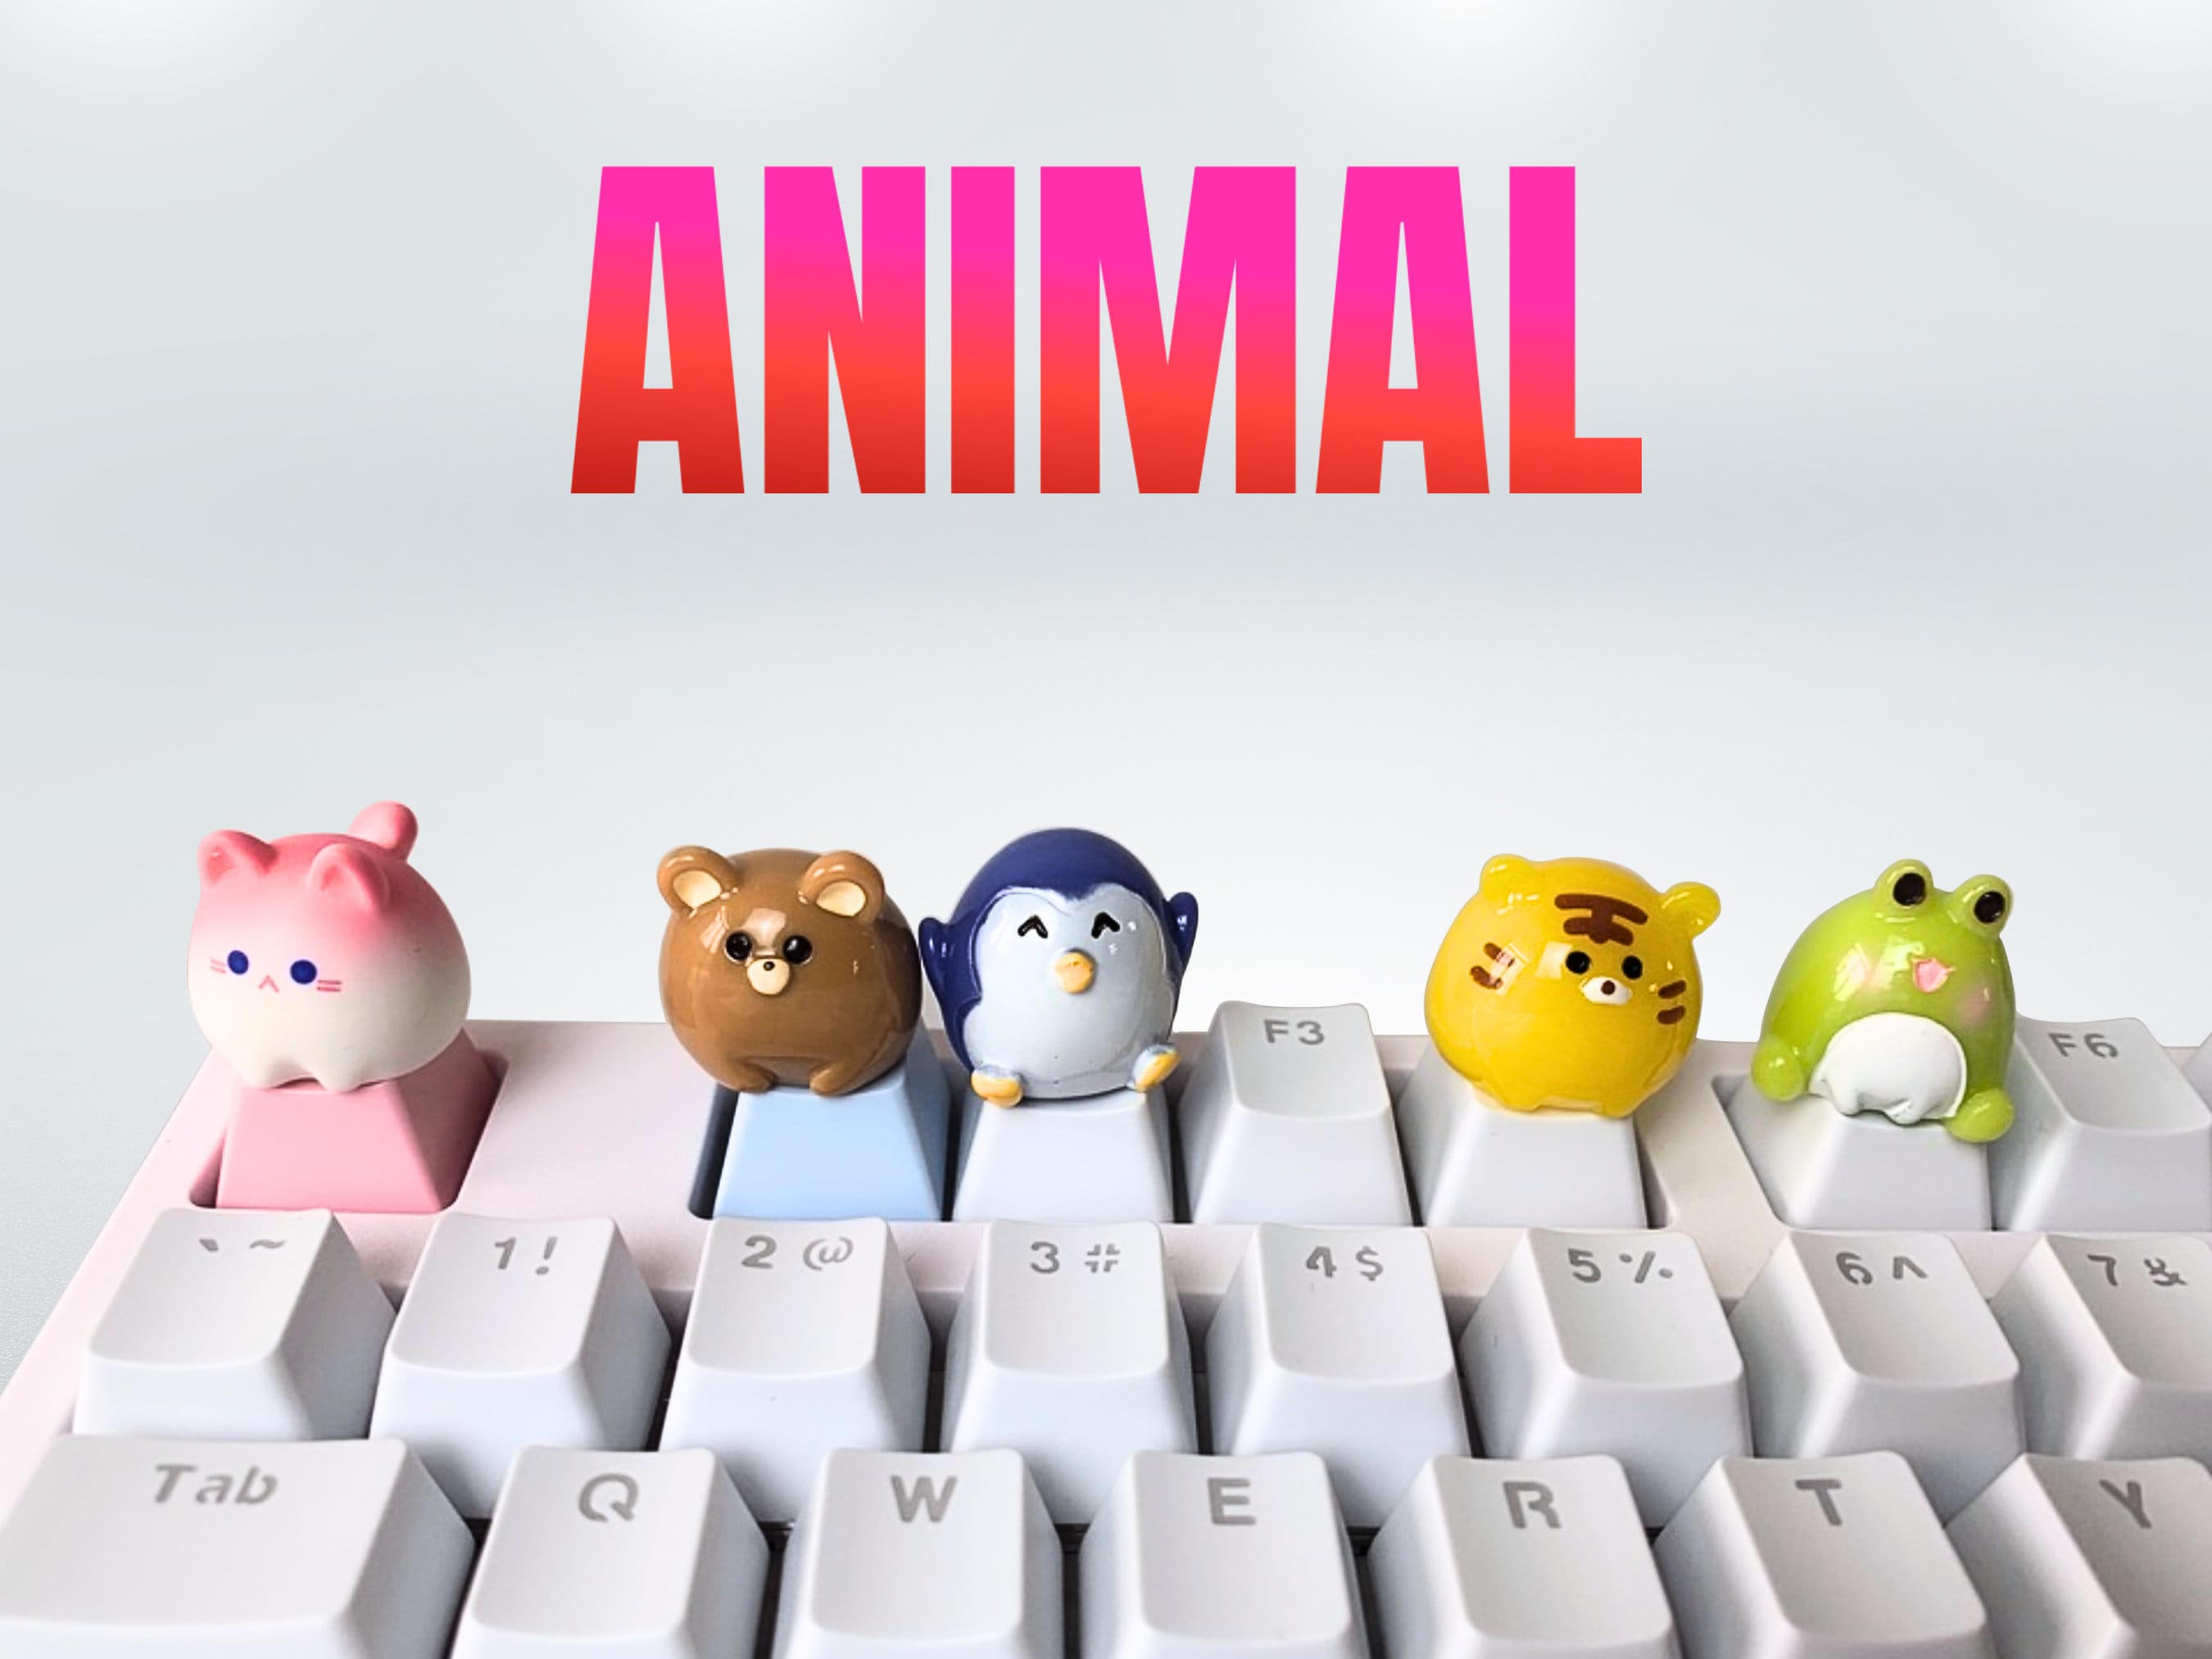 Cute Animals Keycap, Kawaii Keycap, Artisan Keycap, Keycap for MX Cherry Switches Mechanical Keyboard, Handmade Gift